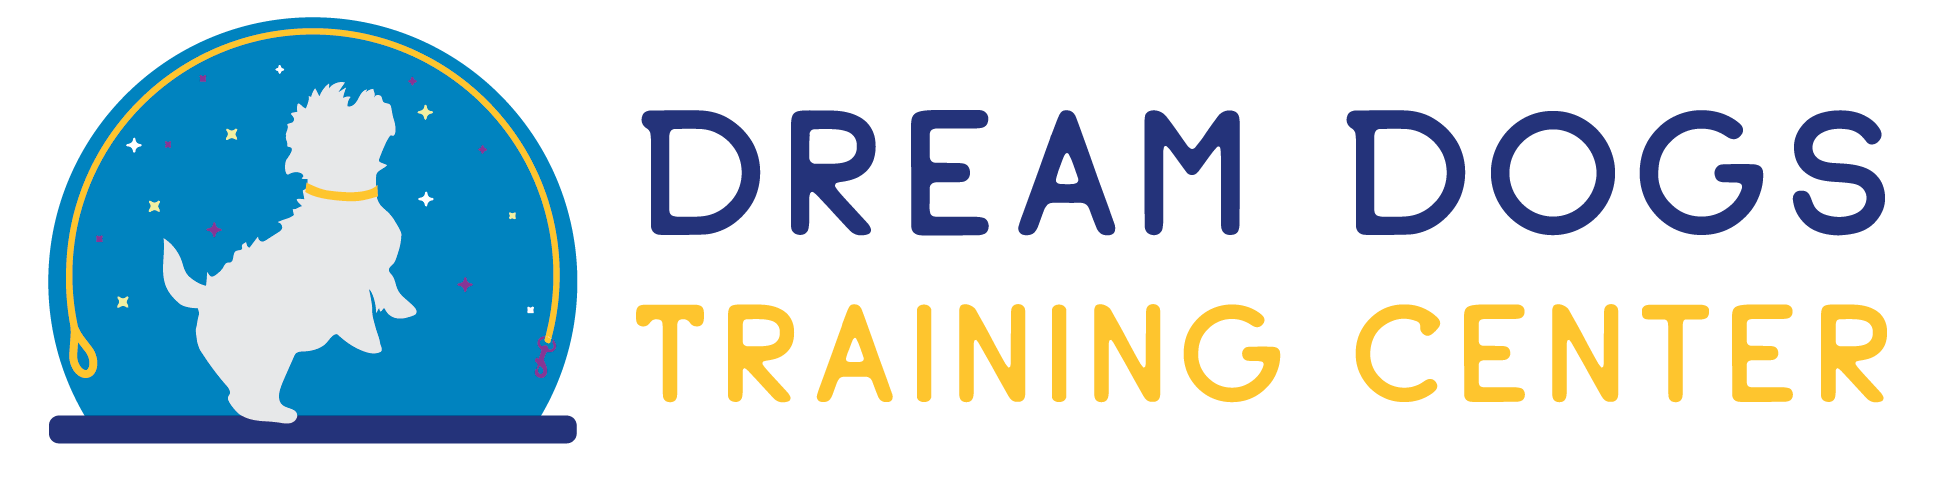 Dream Dogs Training Center